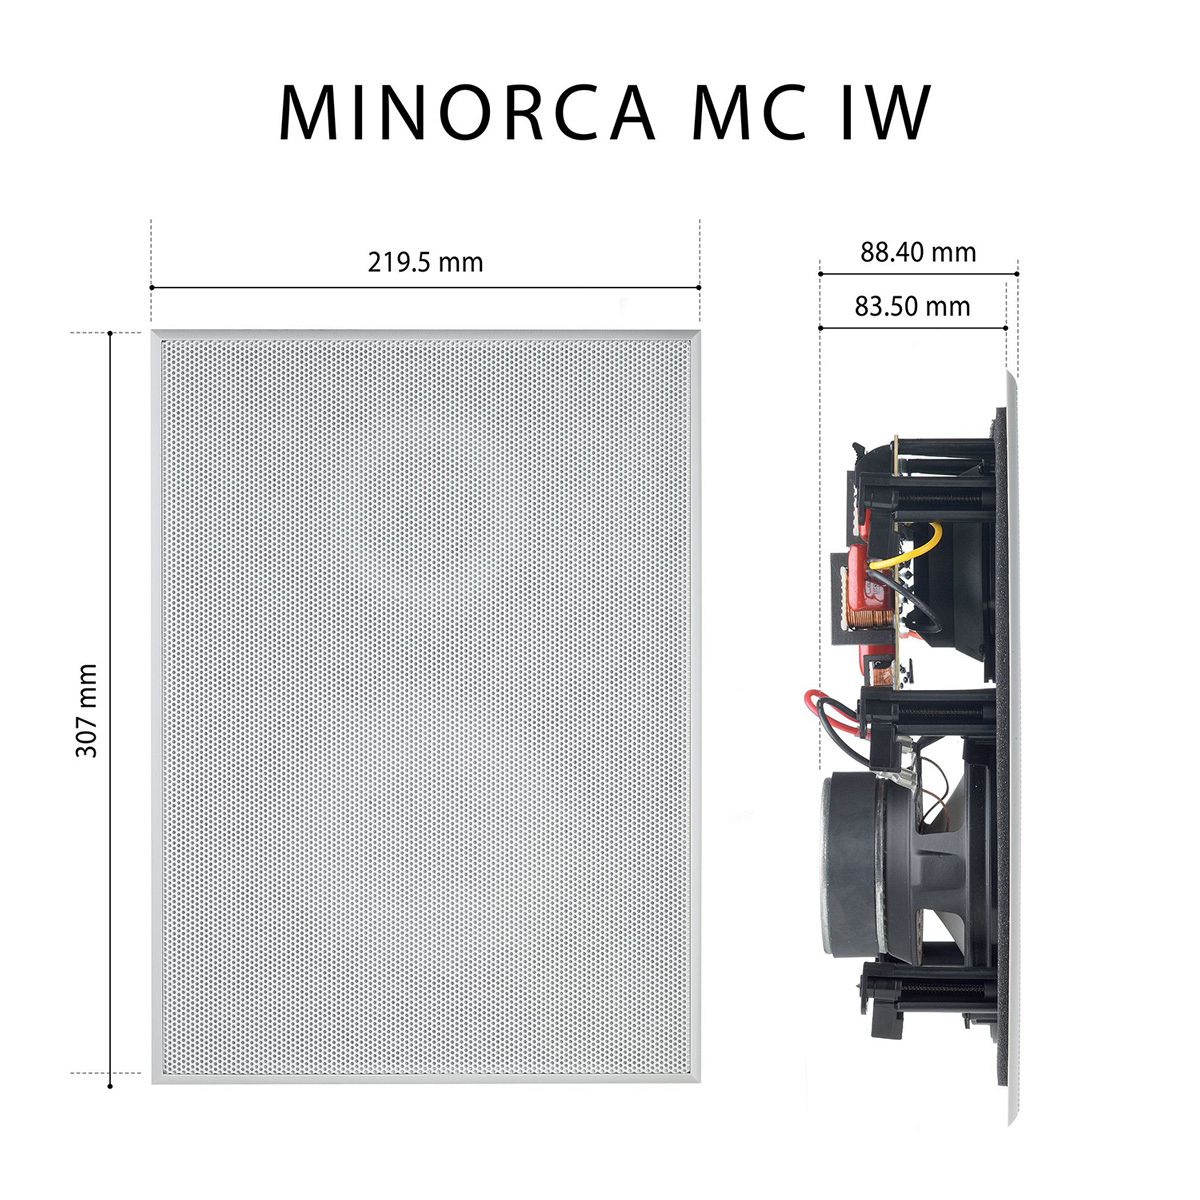 MINORCA MC IW